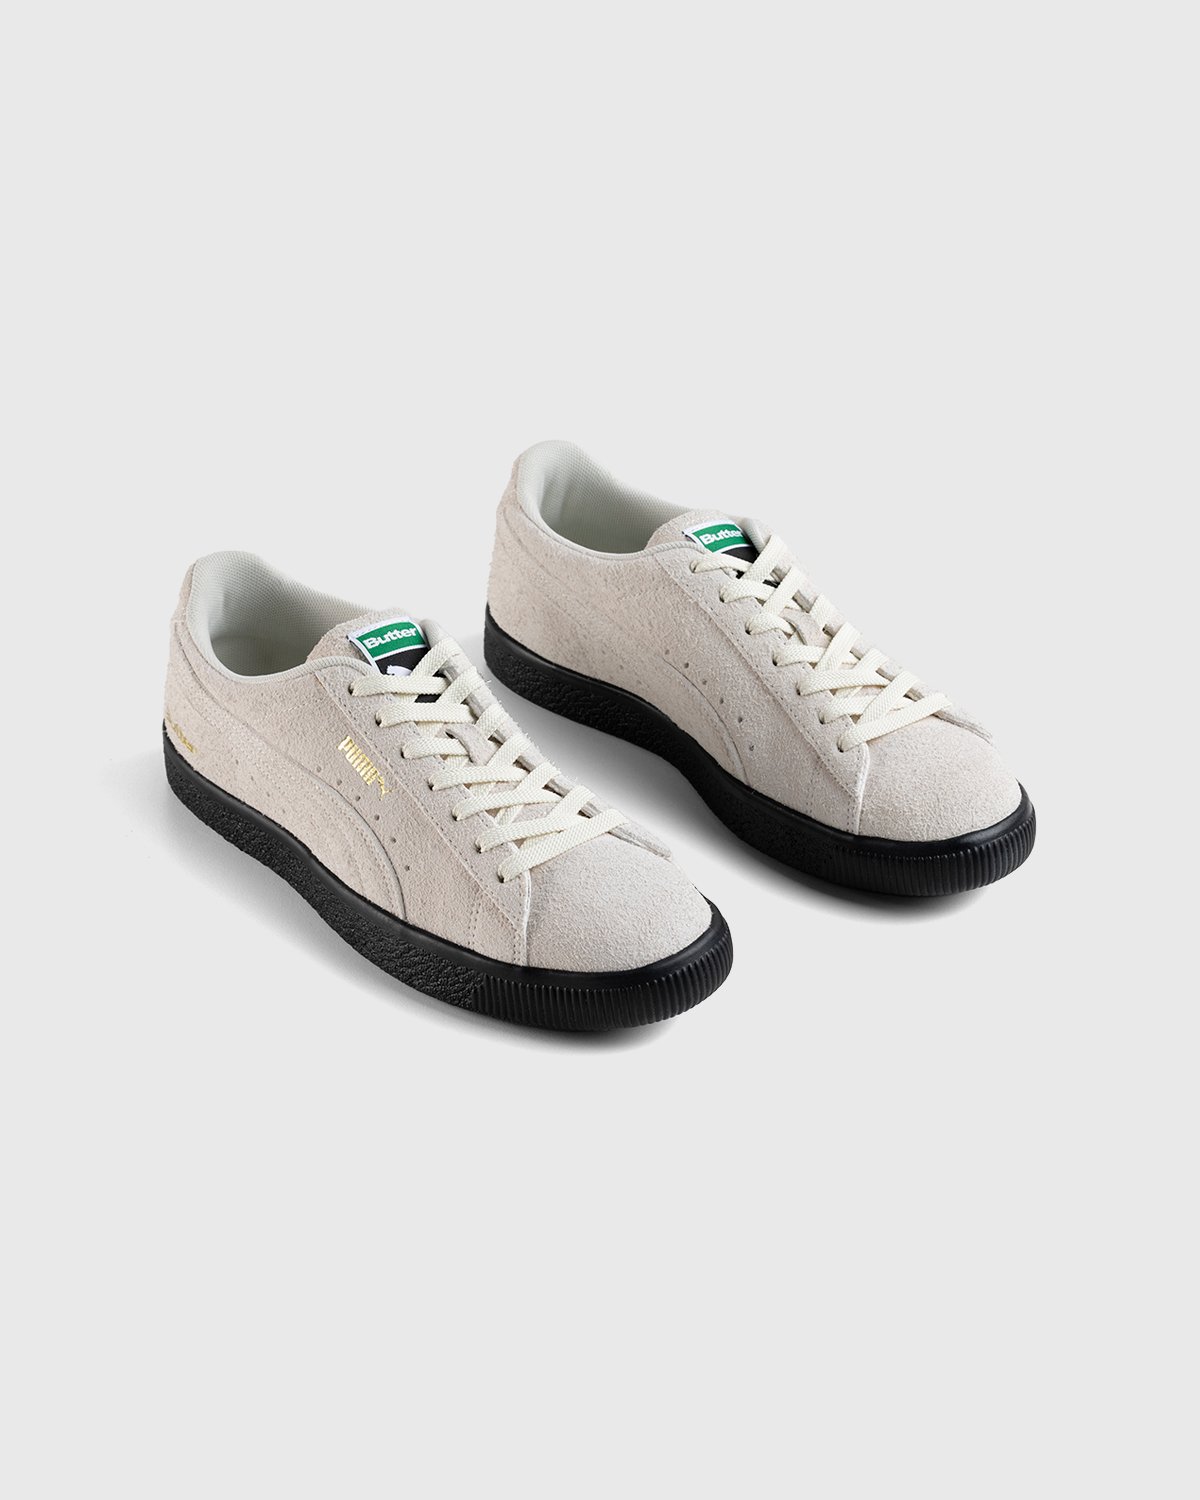 Puma x Butter Goods - Suede VTG Whisper White/Puma Black - Footwear - Green - Image 3